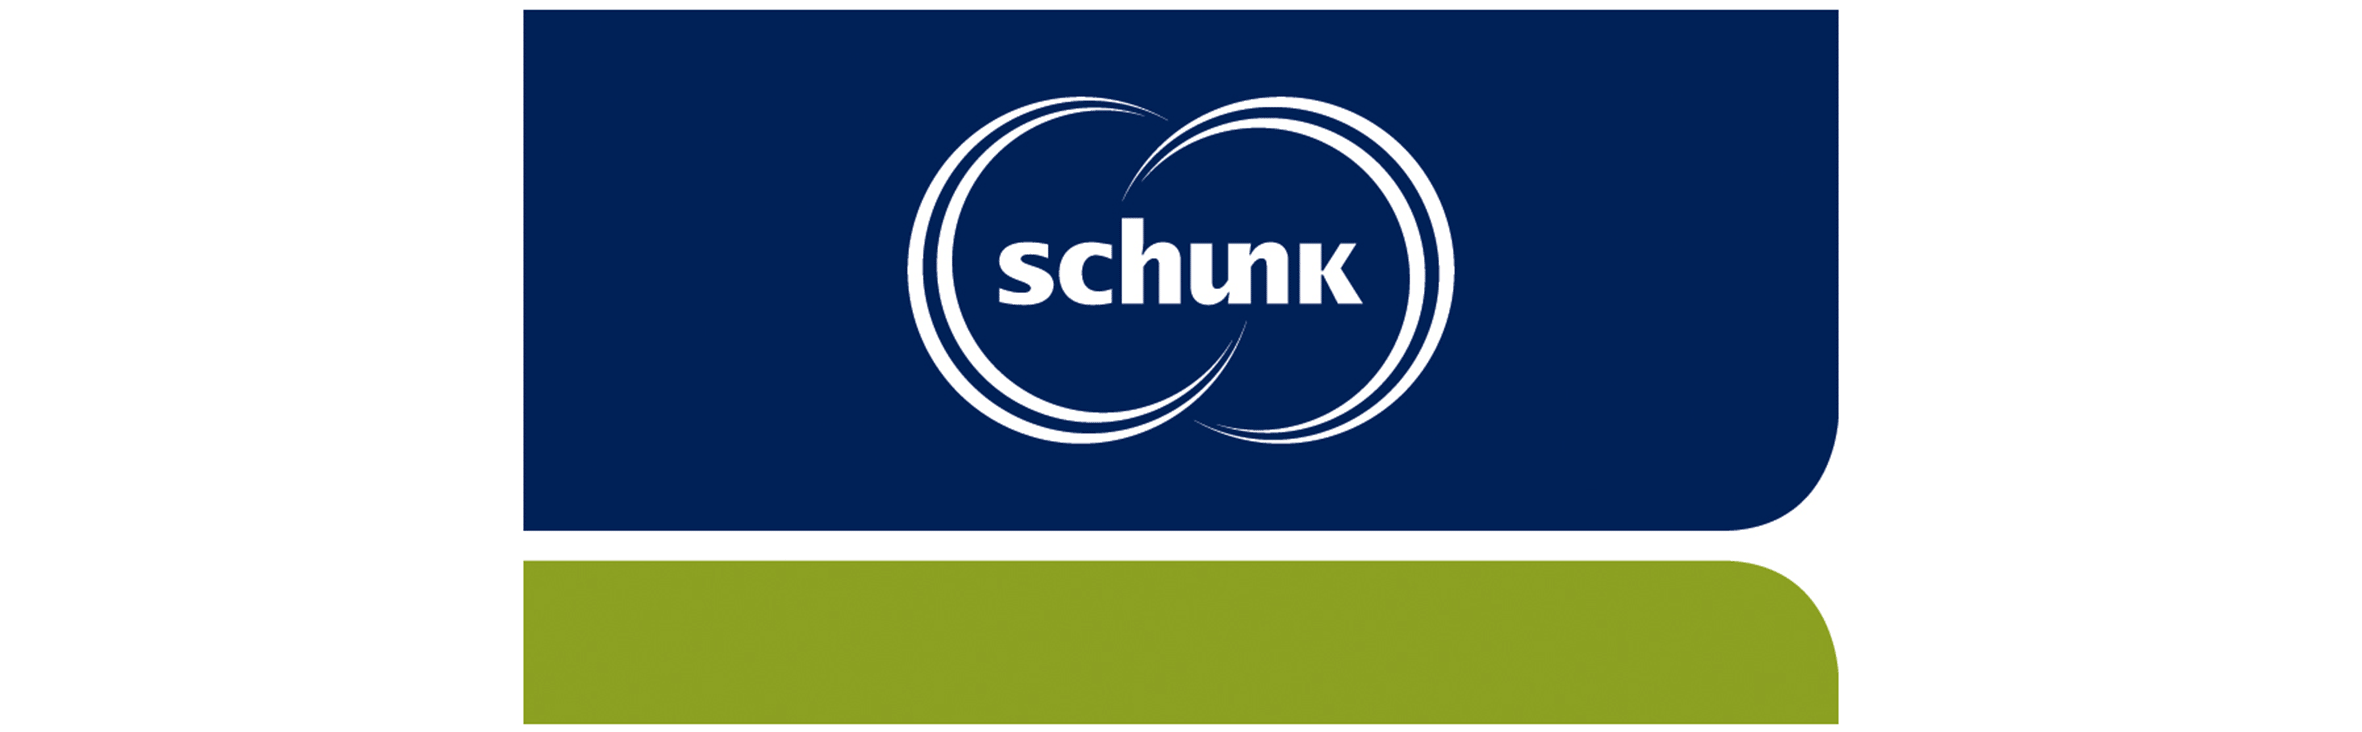 Schunk Group logo